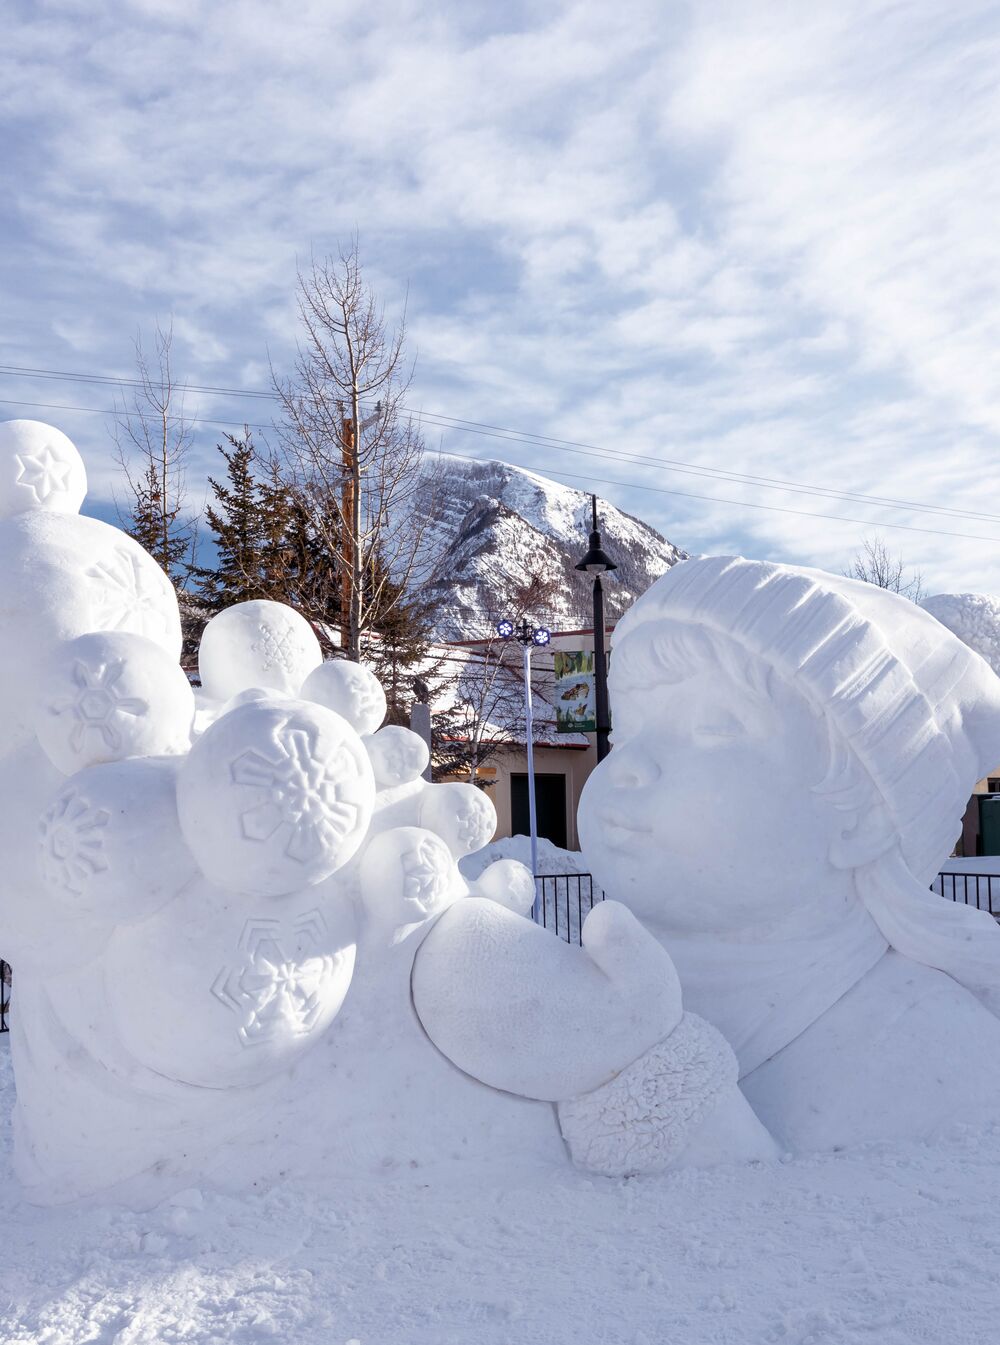 Snow sculpture located on Banff Avenue during SnowDays in Banff